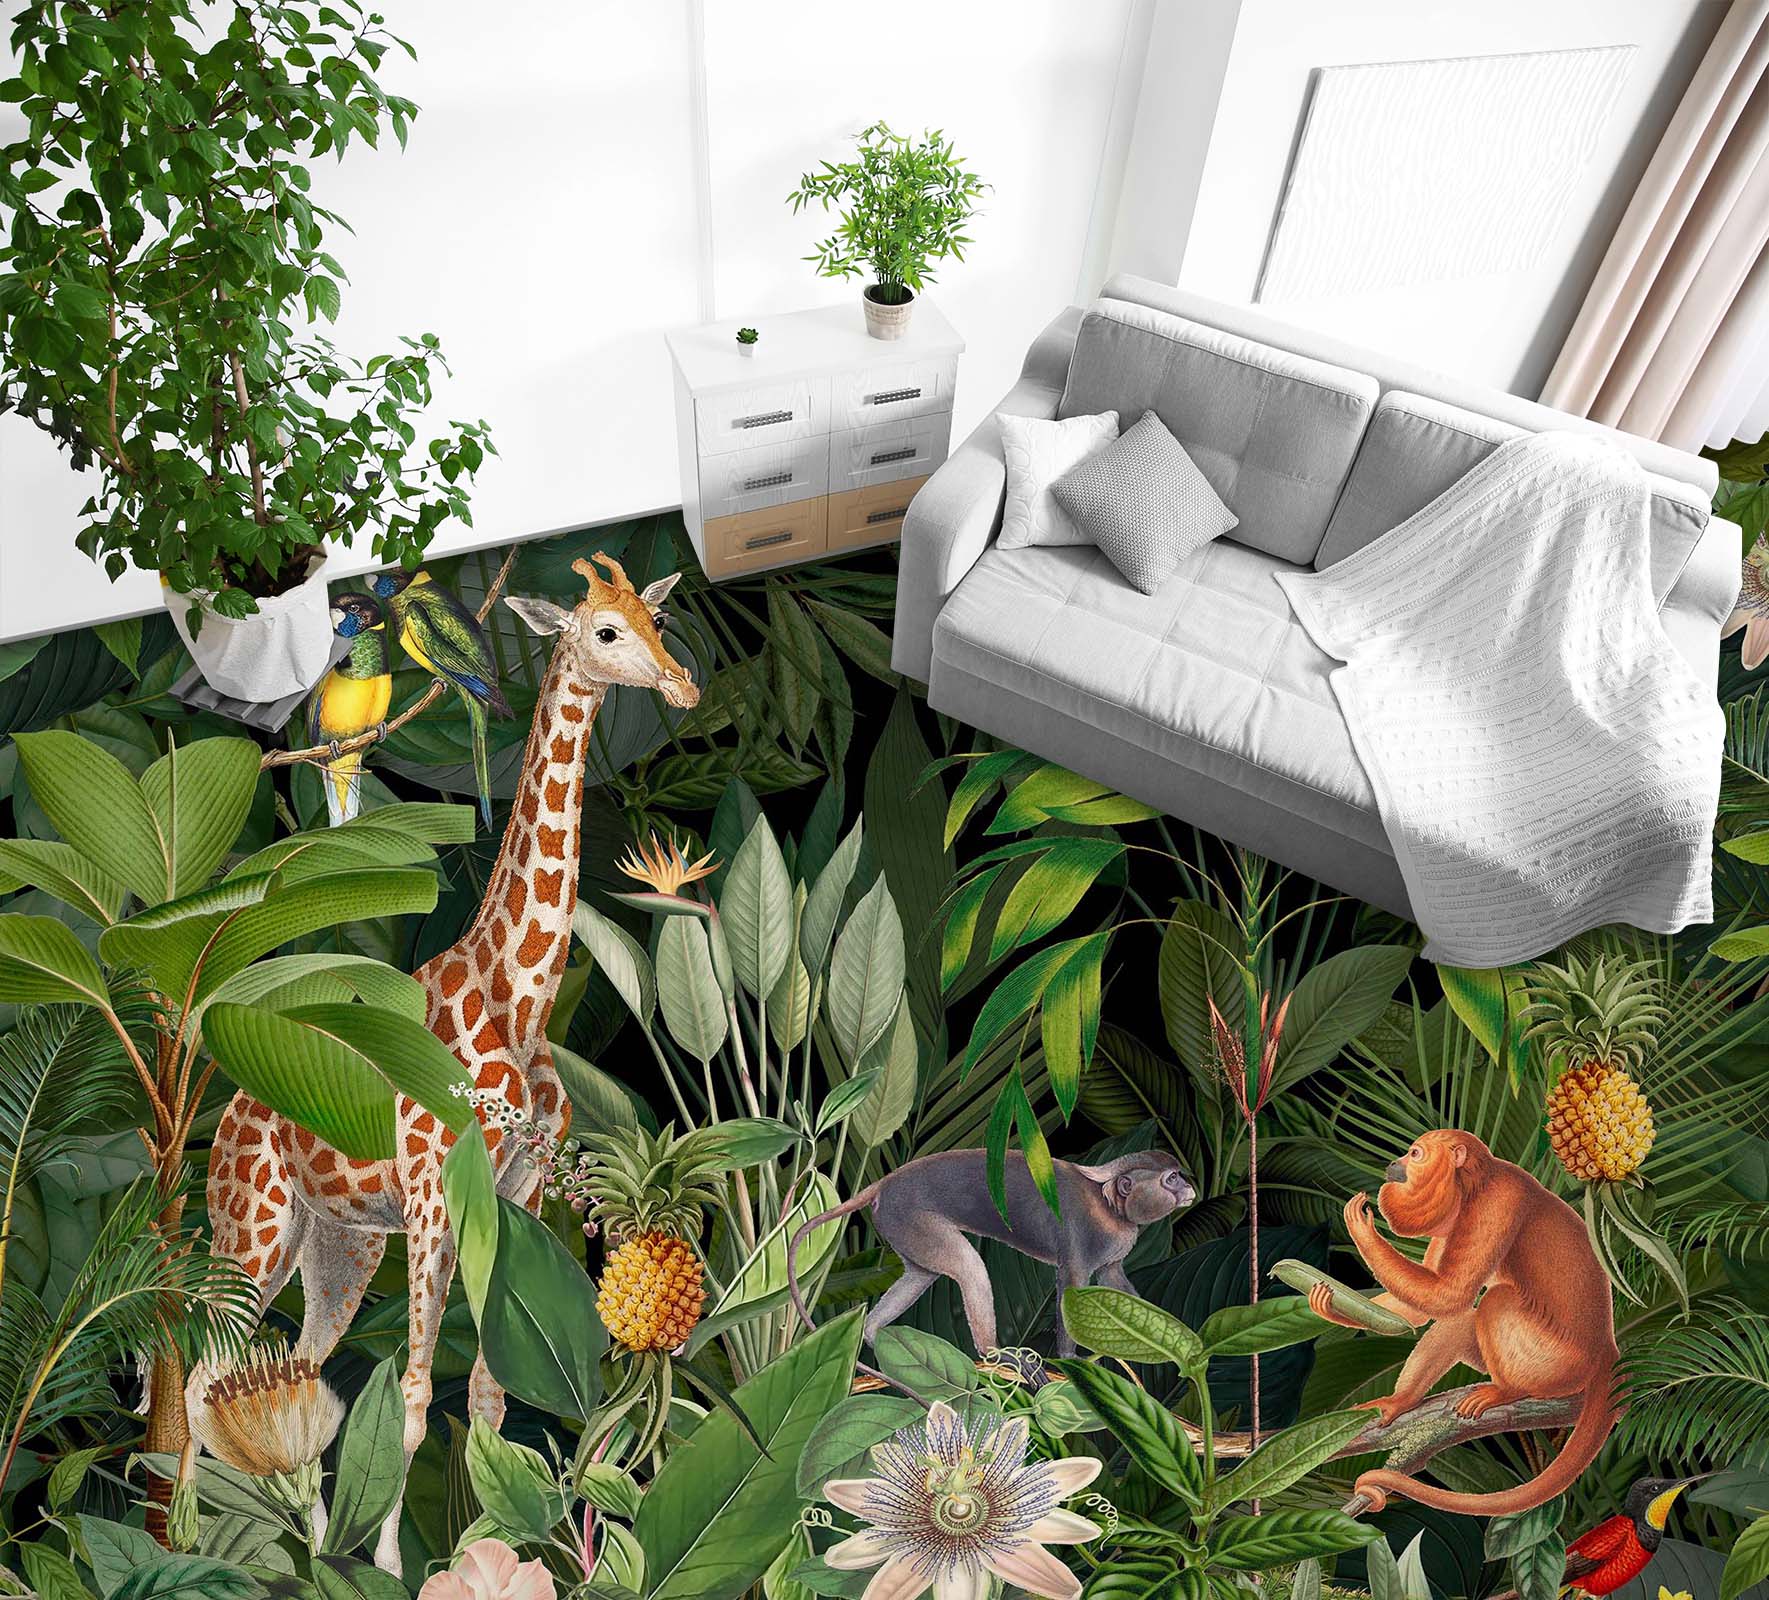 3D Giraffe Monkey Jungle 104166 Andrea Haase Floor Mural  Wallpaper Murals Self-Adhesive Removable Print Epoxy